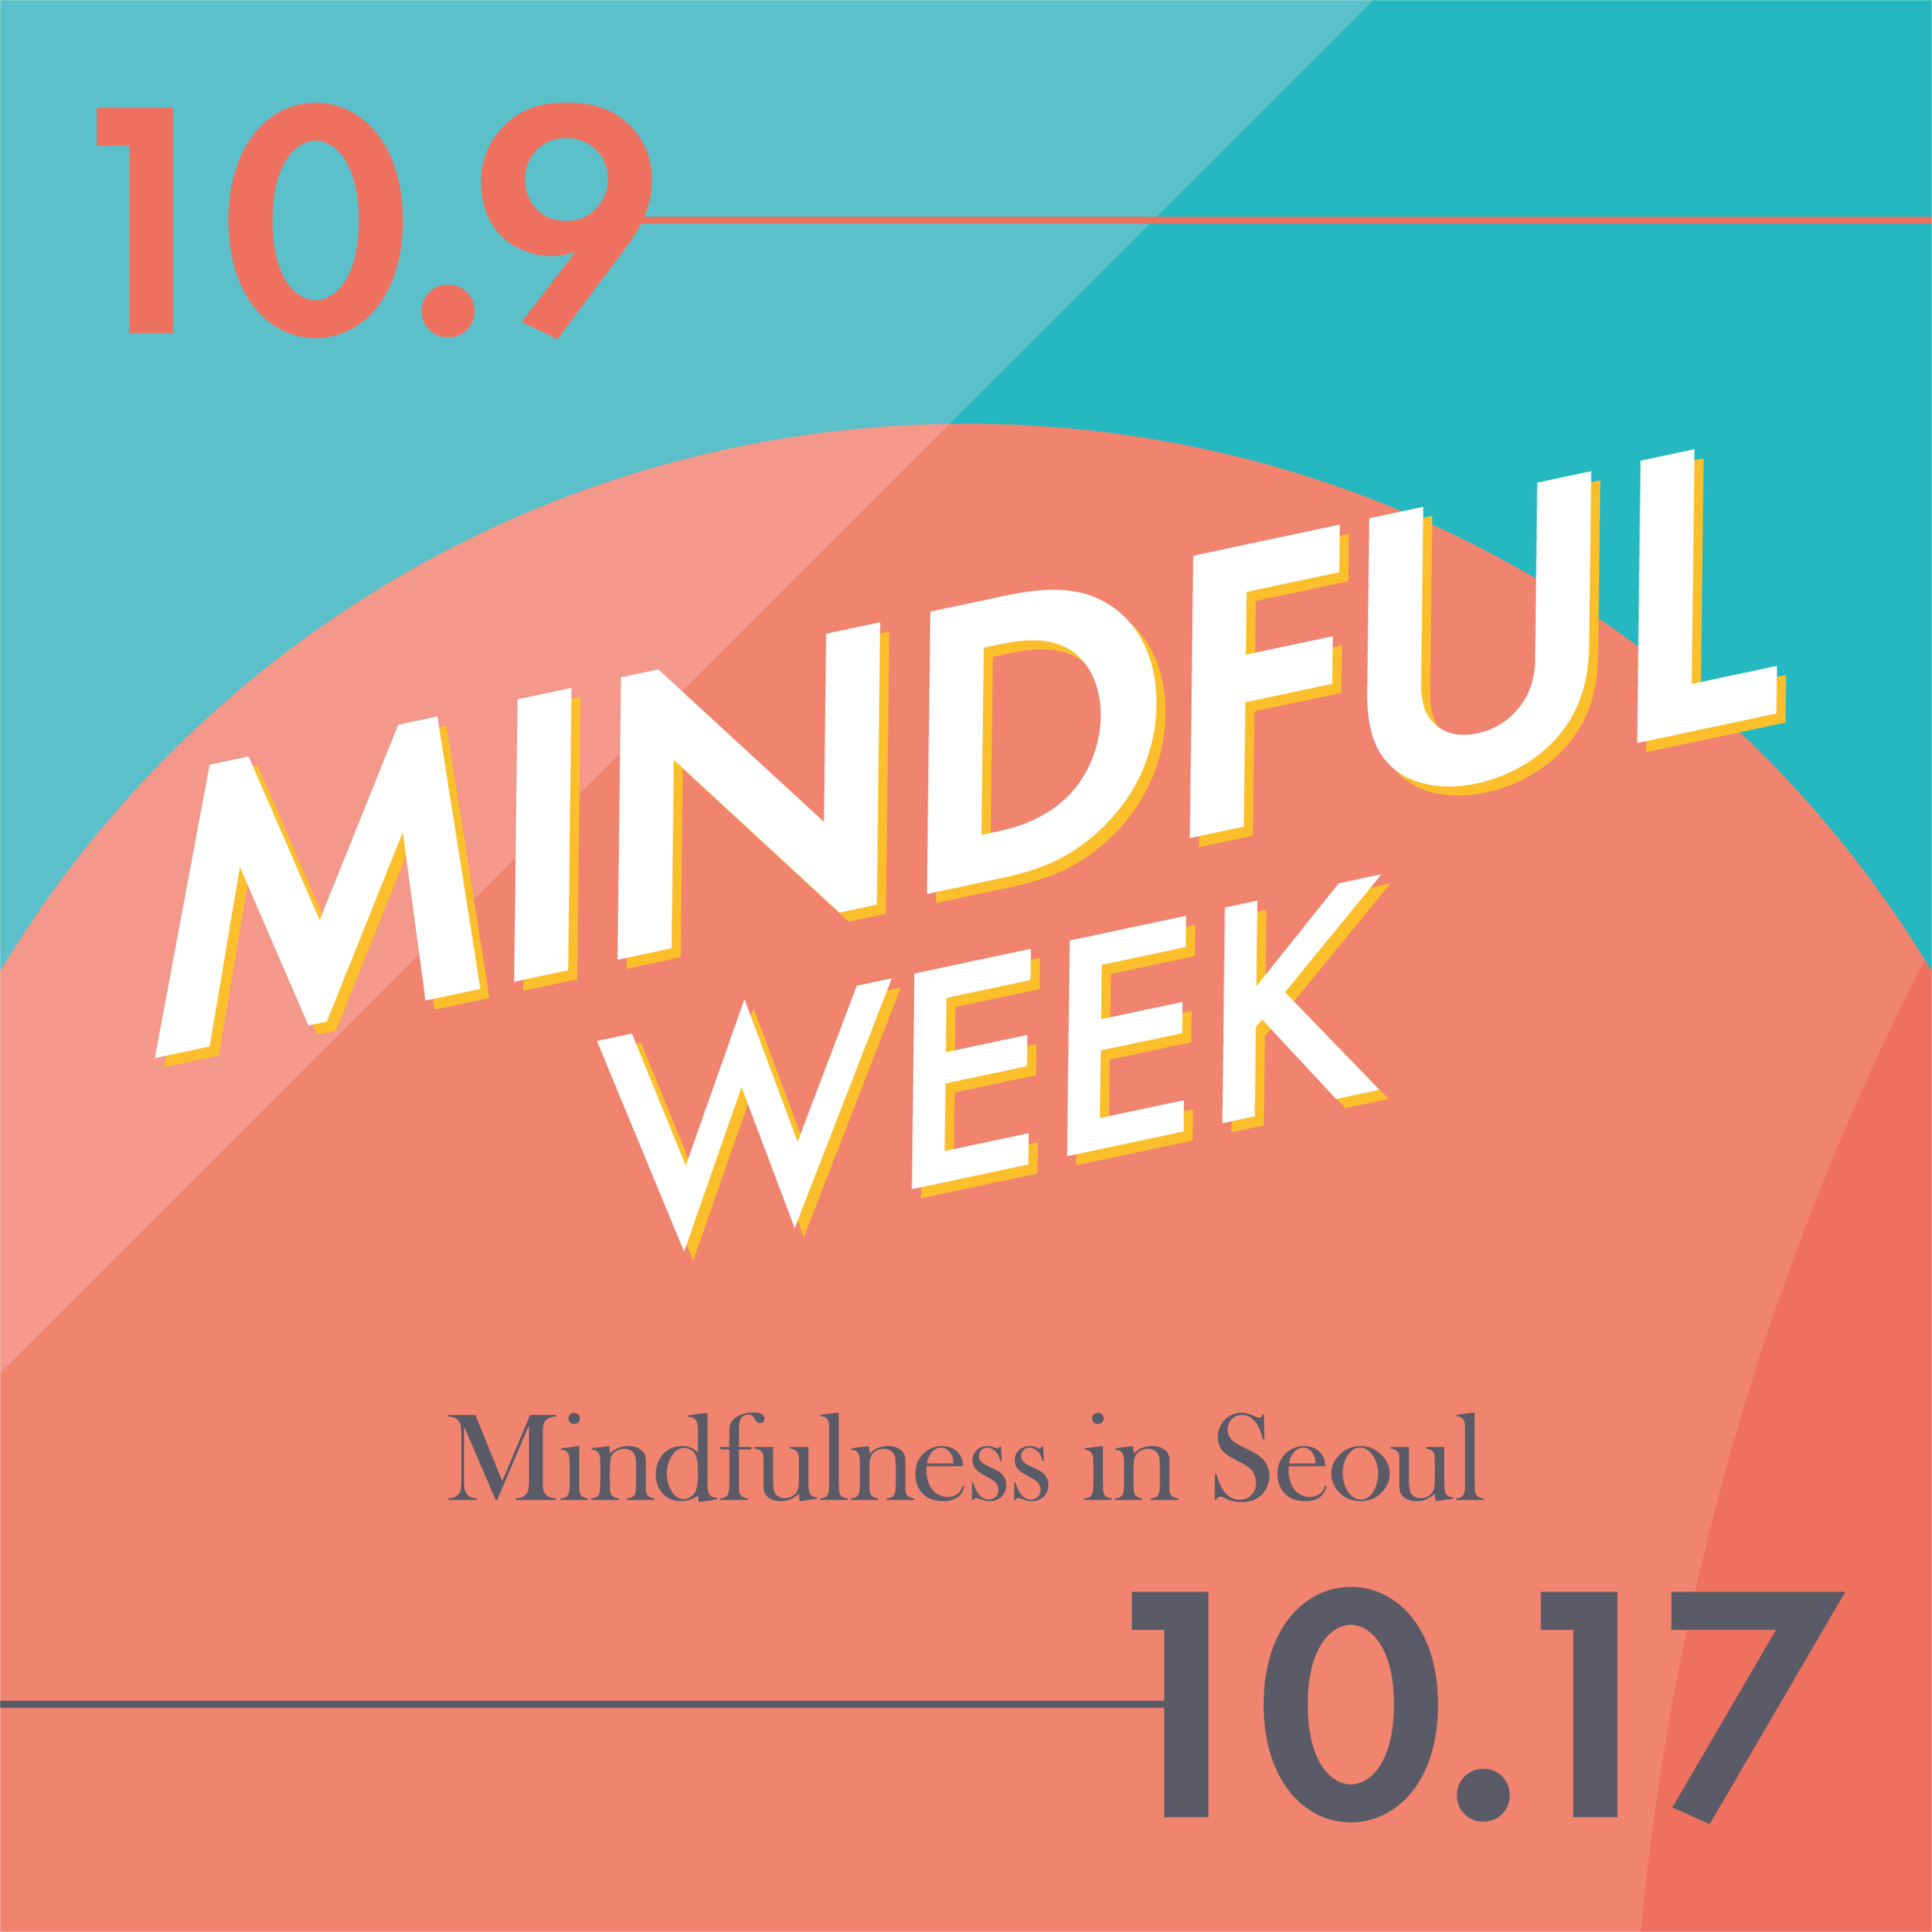 Mindful Week